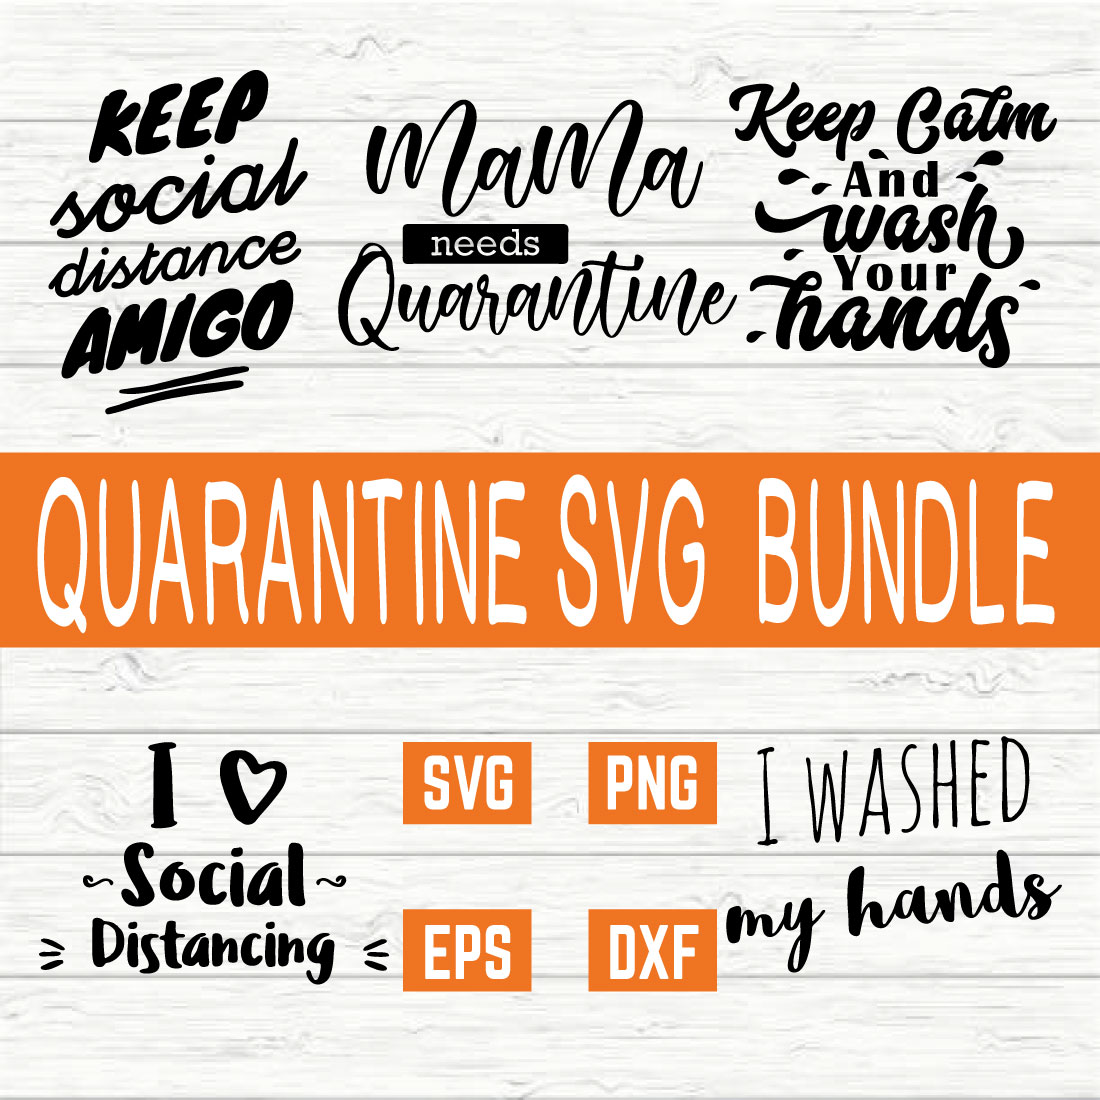 Quarantine Svg Bundle vol 2 preview image.